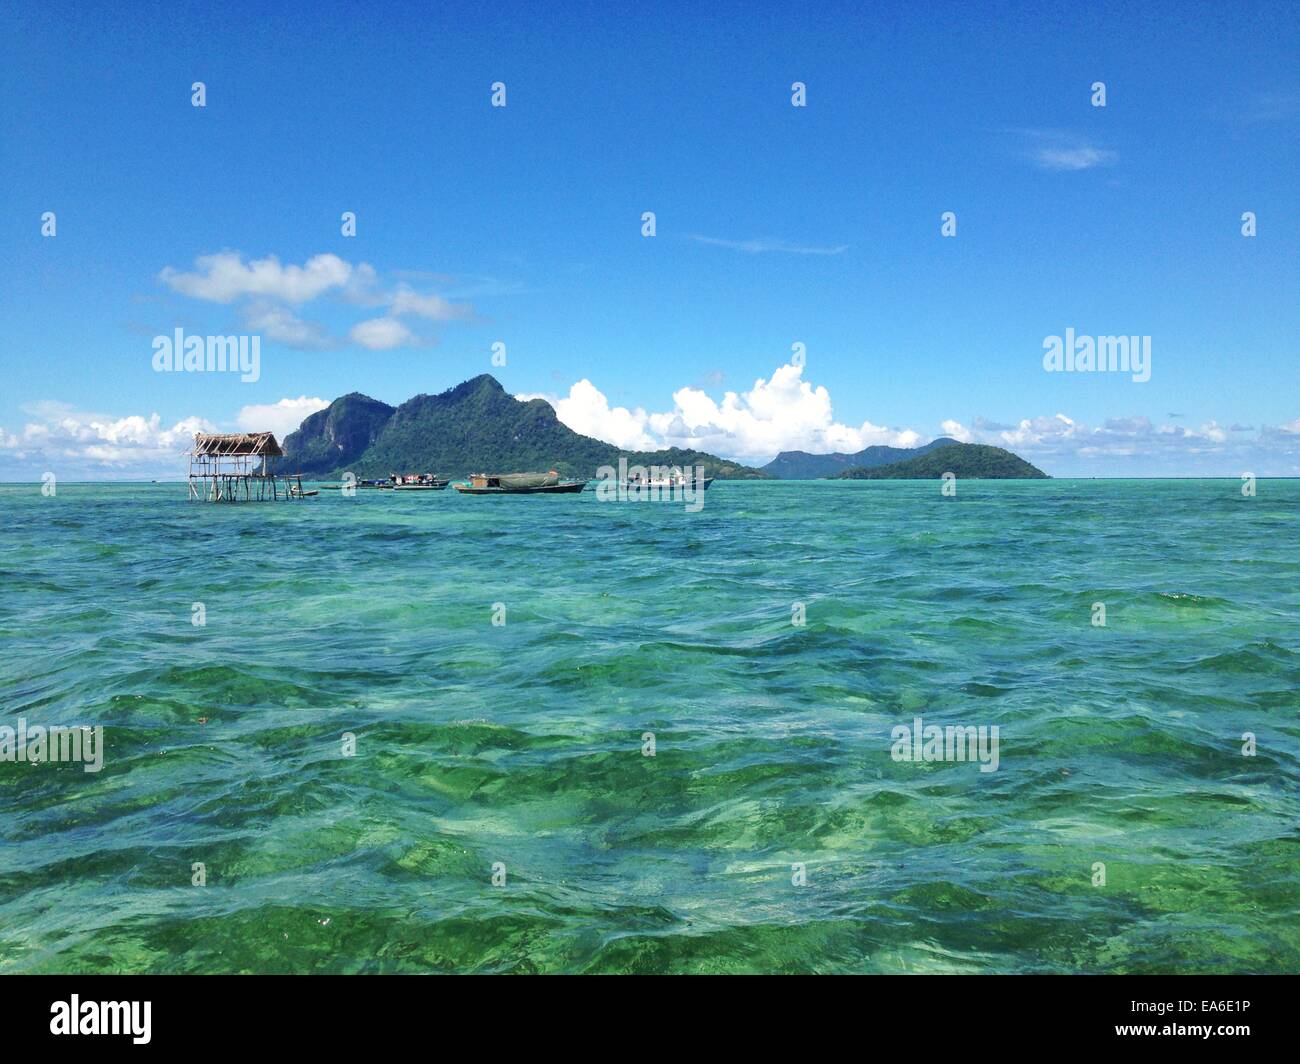 Malaysia, Sabah, Sea gypsy huts and island Stock Photo